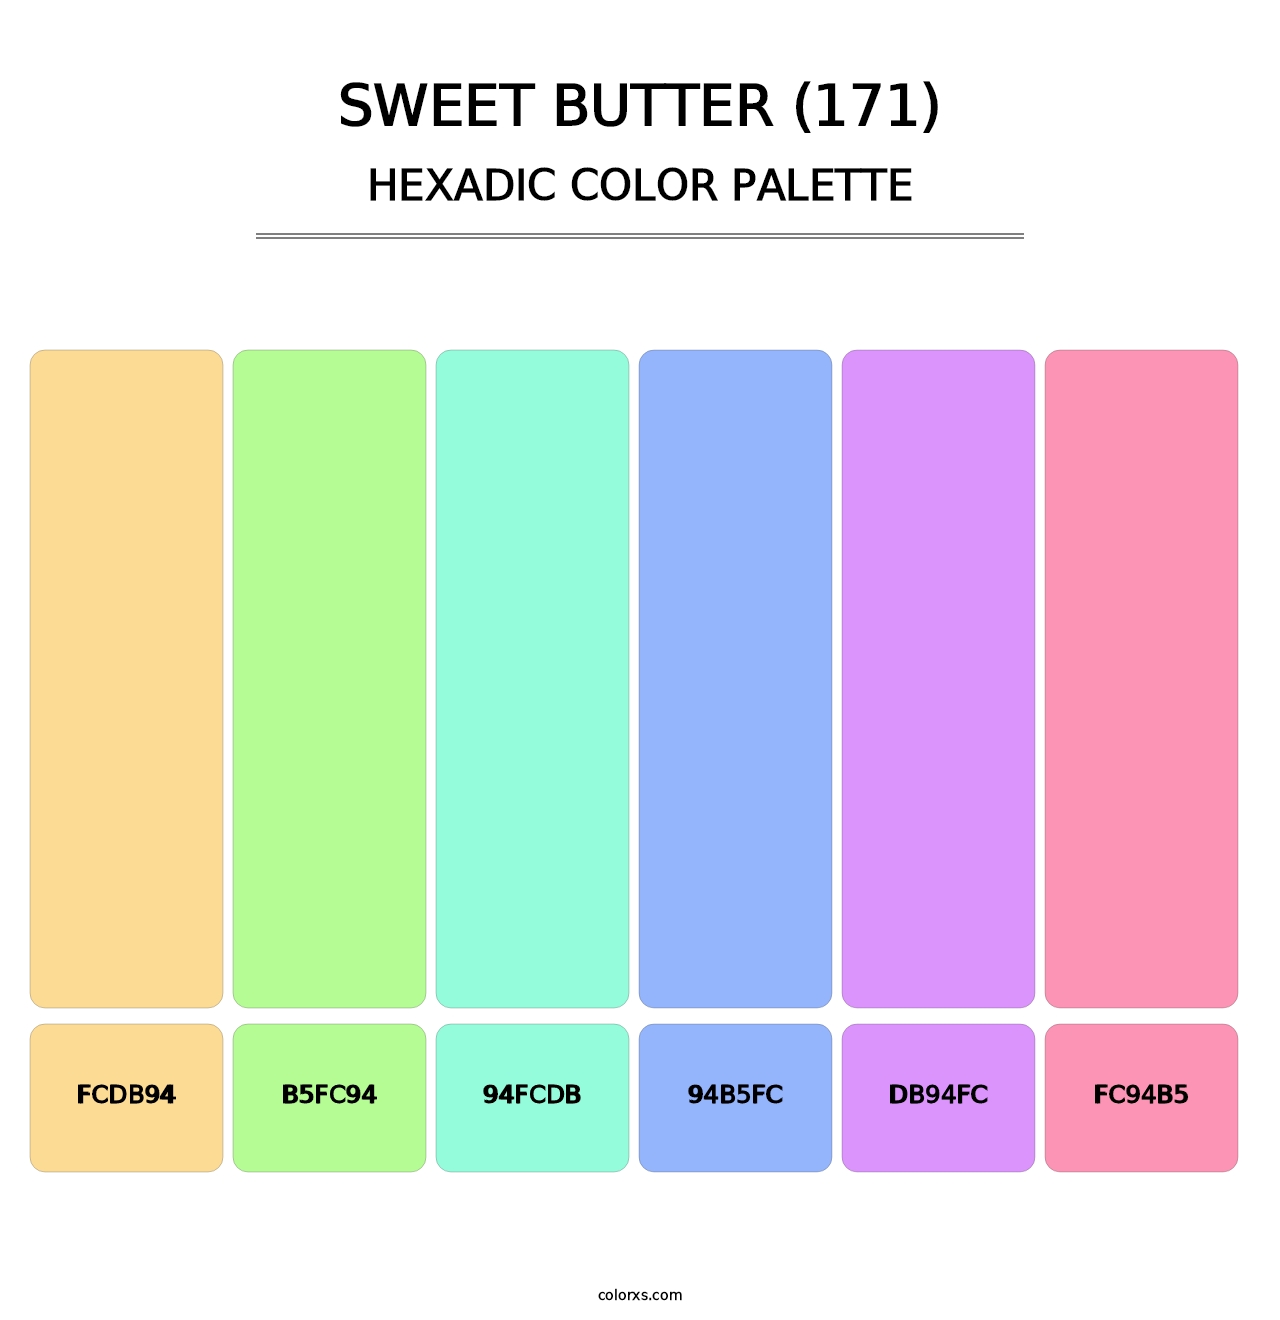 Sweet Butter (171) - Hexadic Color Palette